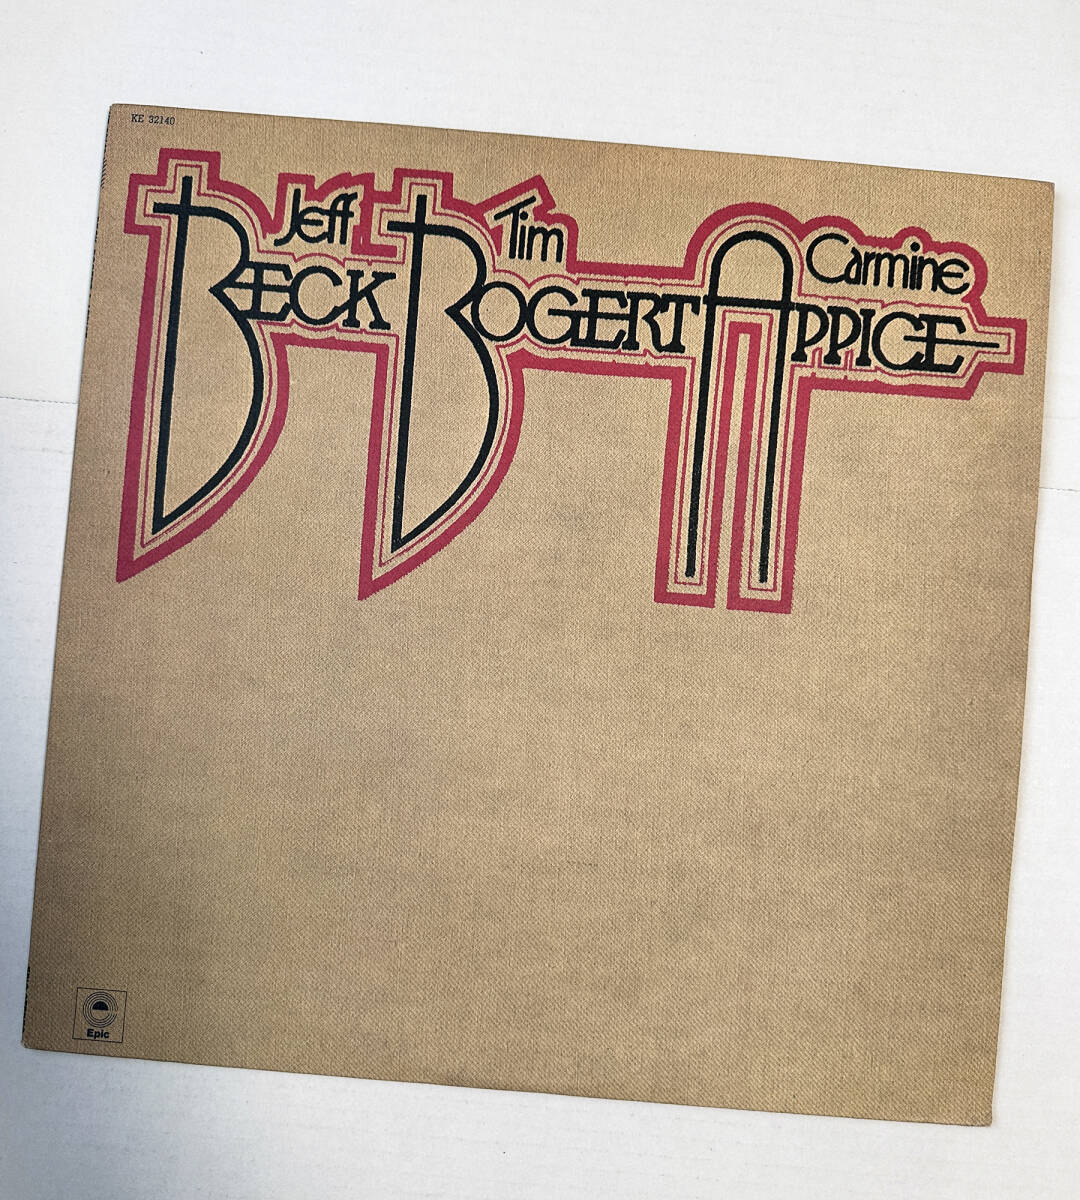 US盤 LP Beck, Bogert & Appice ベック・ボガート＆アピス_画像1